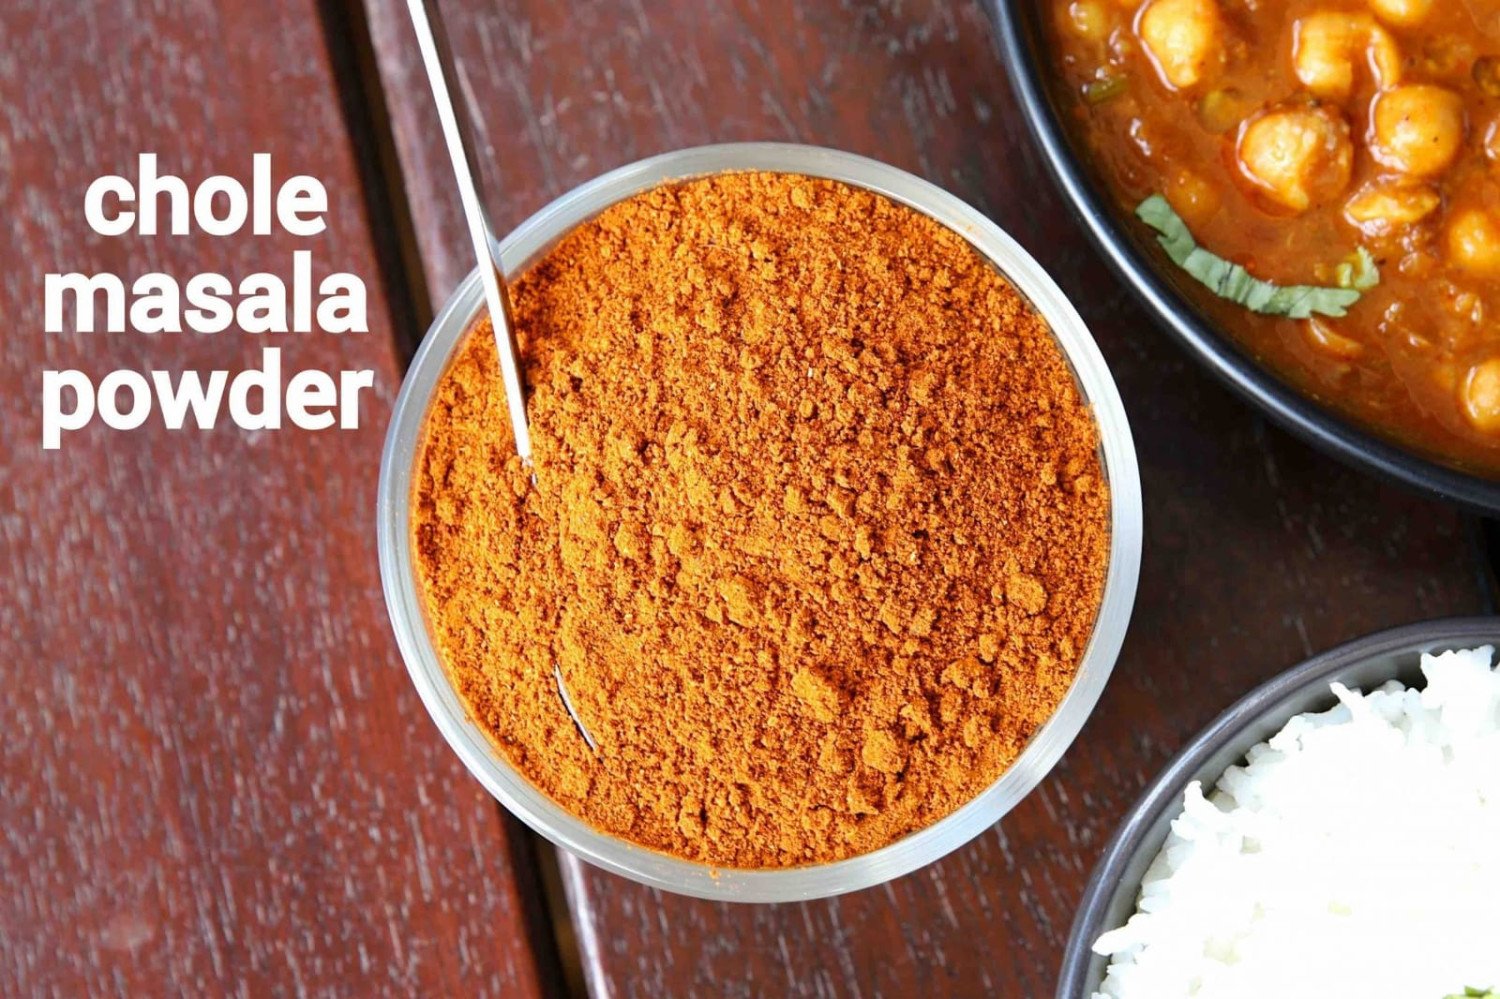 Chettinad Natural Organic Chole Masala Powder 500 Gram ( Pack of 1 ) | Blended Whole Spices | Chole Masala Powder | Homemade Chole Masala Powder | Chole Masala Podi | Chana Masala Powder